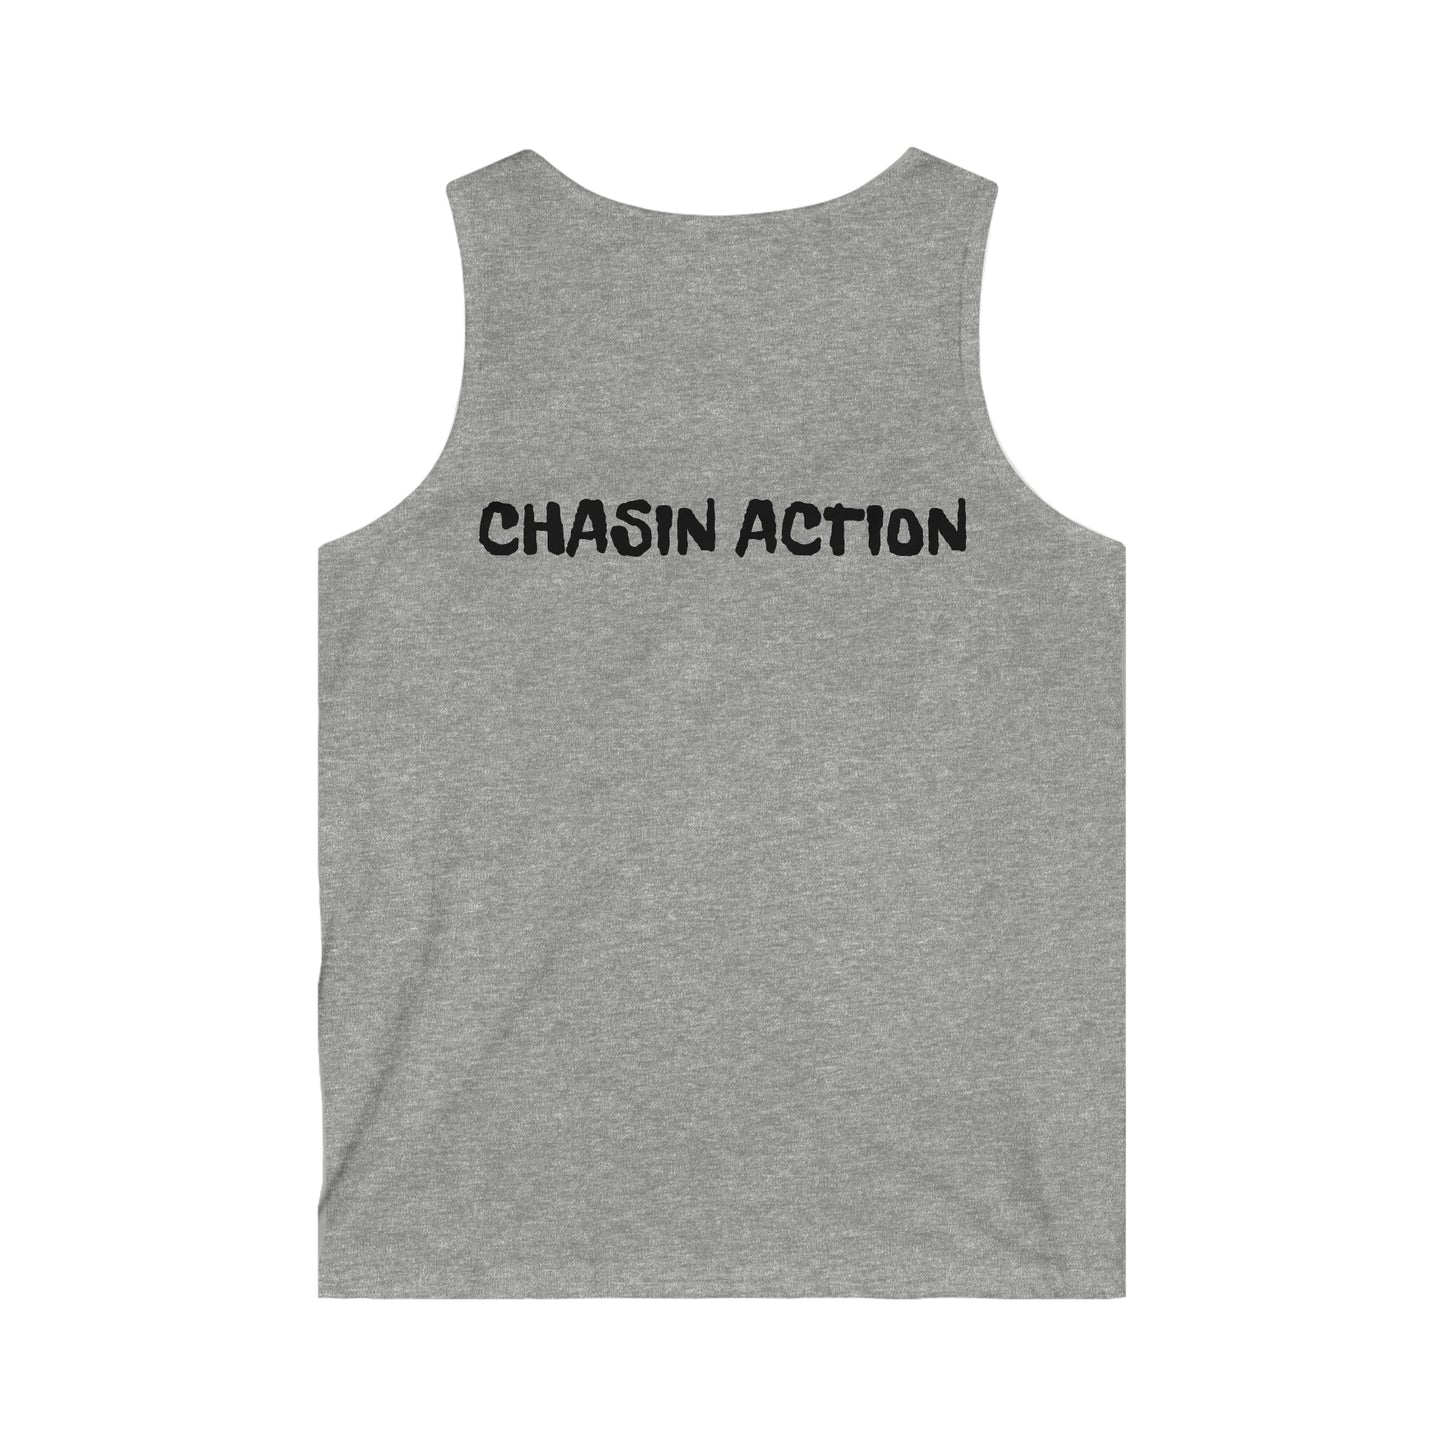 MUSH "Chasin Action" Men's Ultra Cotton Tank Top